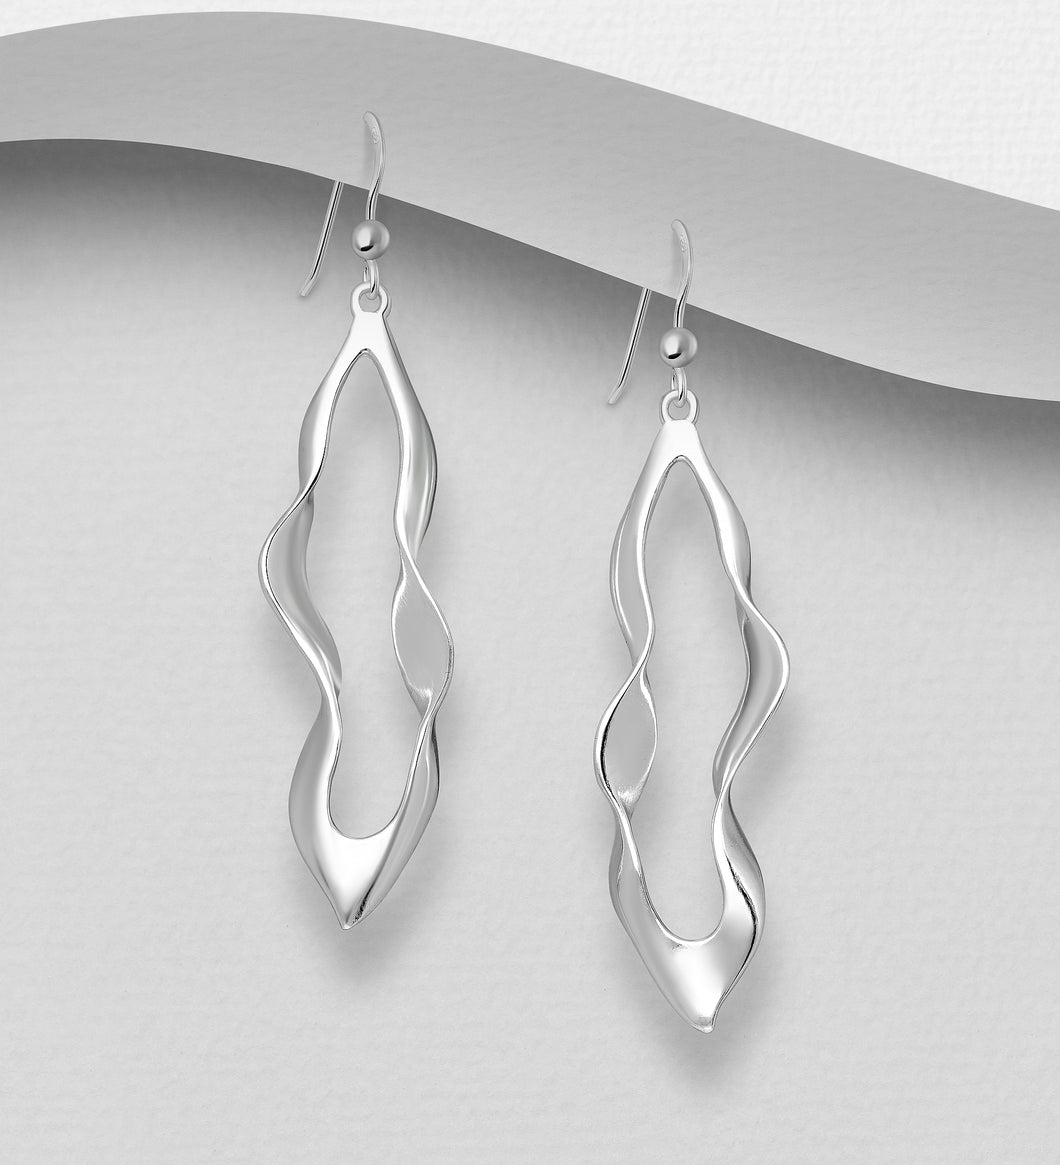 Sterling Silver Curvy Dangle Abstract Design Hook Earrings